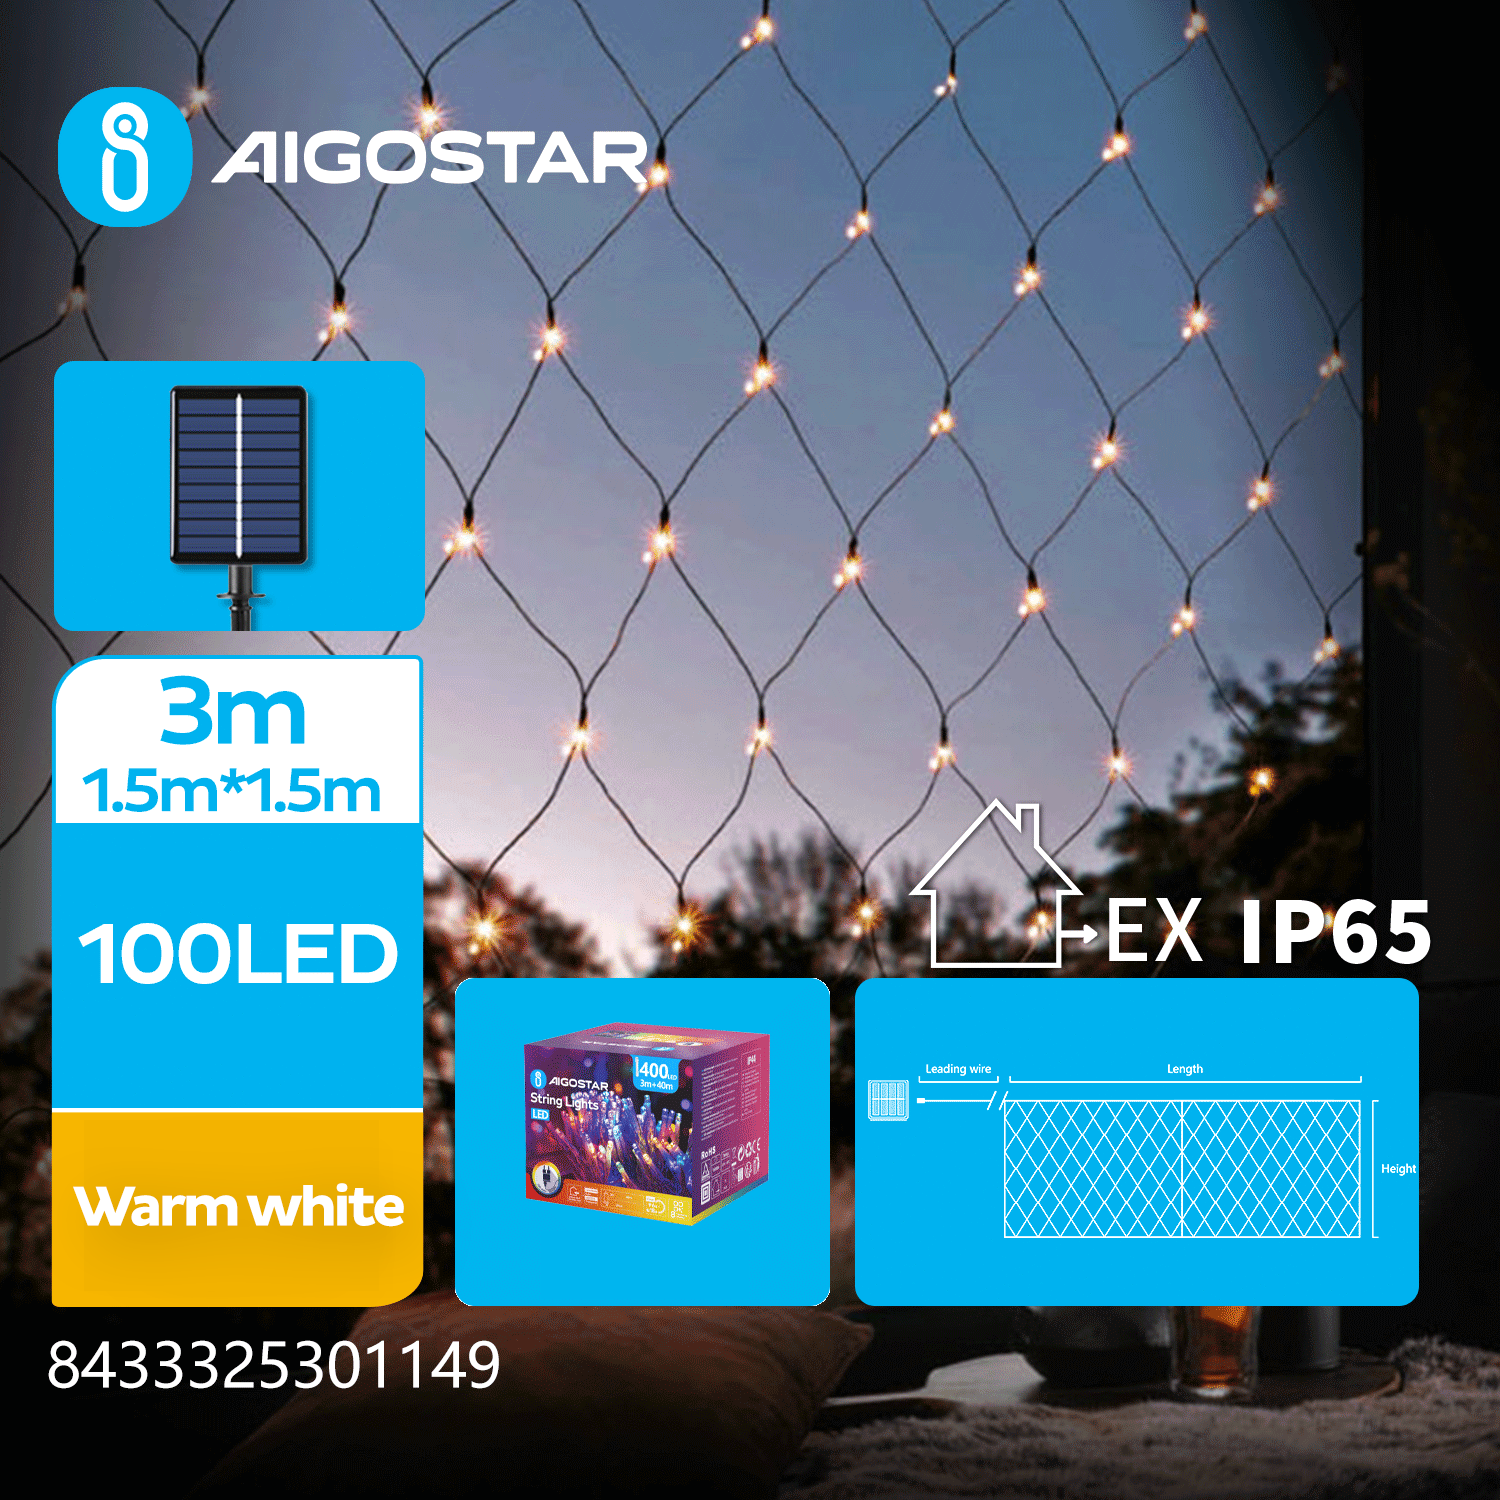 Aigostar Net of flat solar light strips, Warm white, 1.5m*1.5m=3m